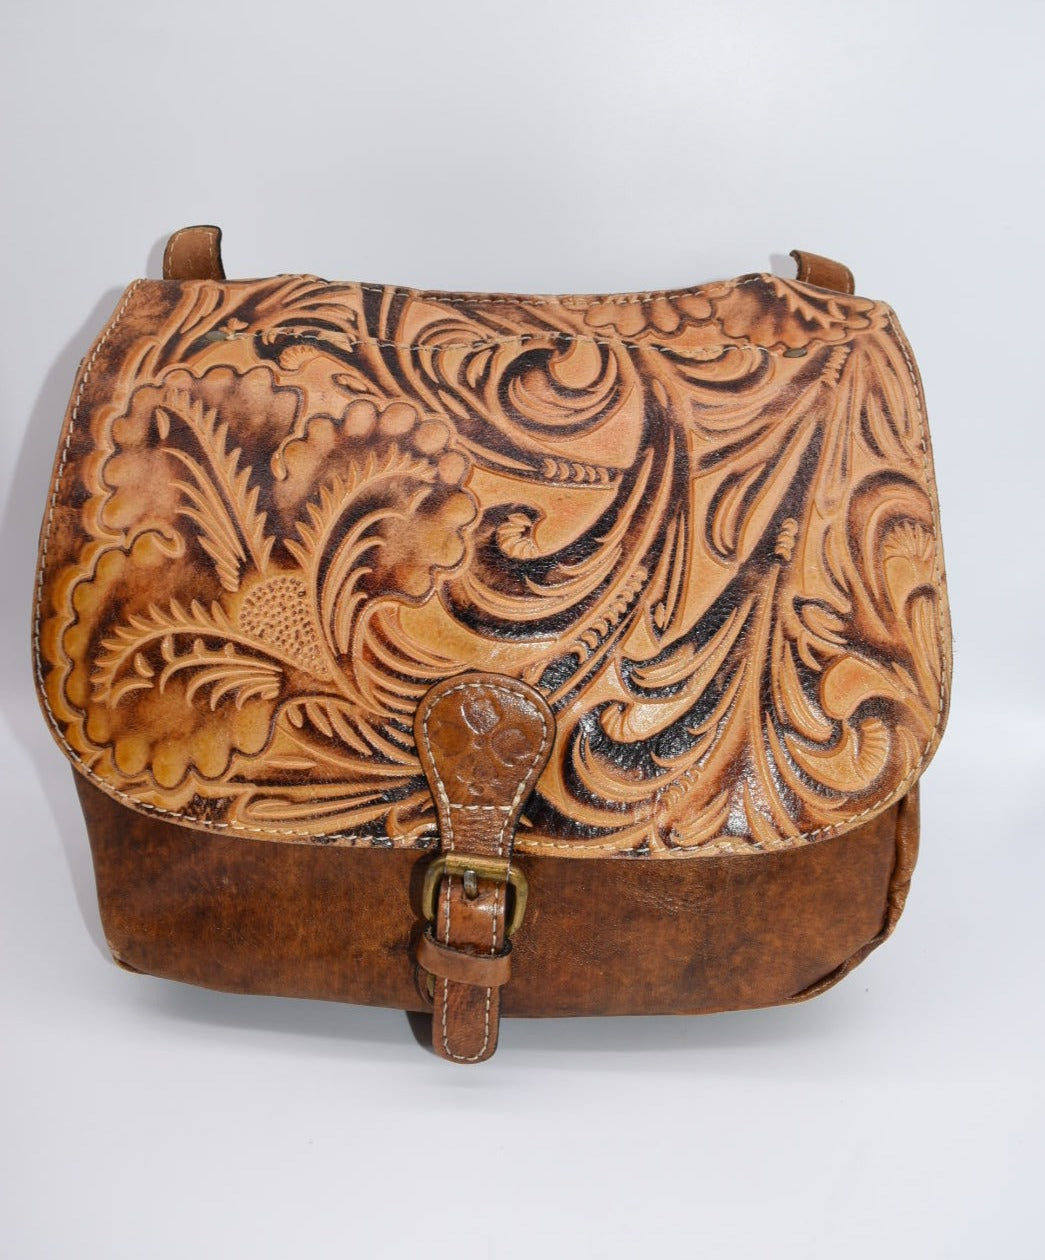 Patricia Nash London Saddle Bag in Tuscan Tooled Leather